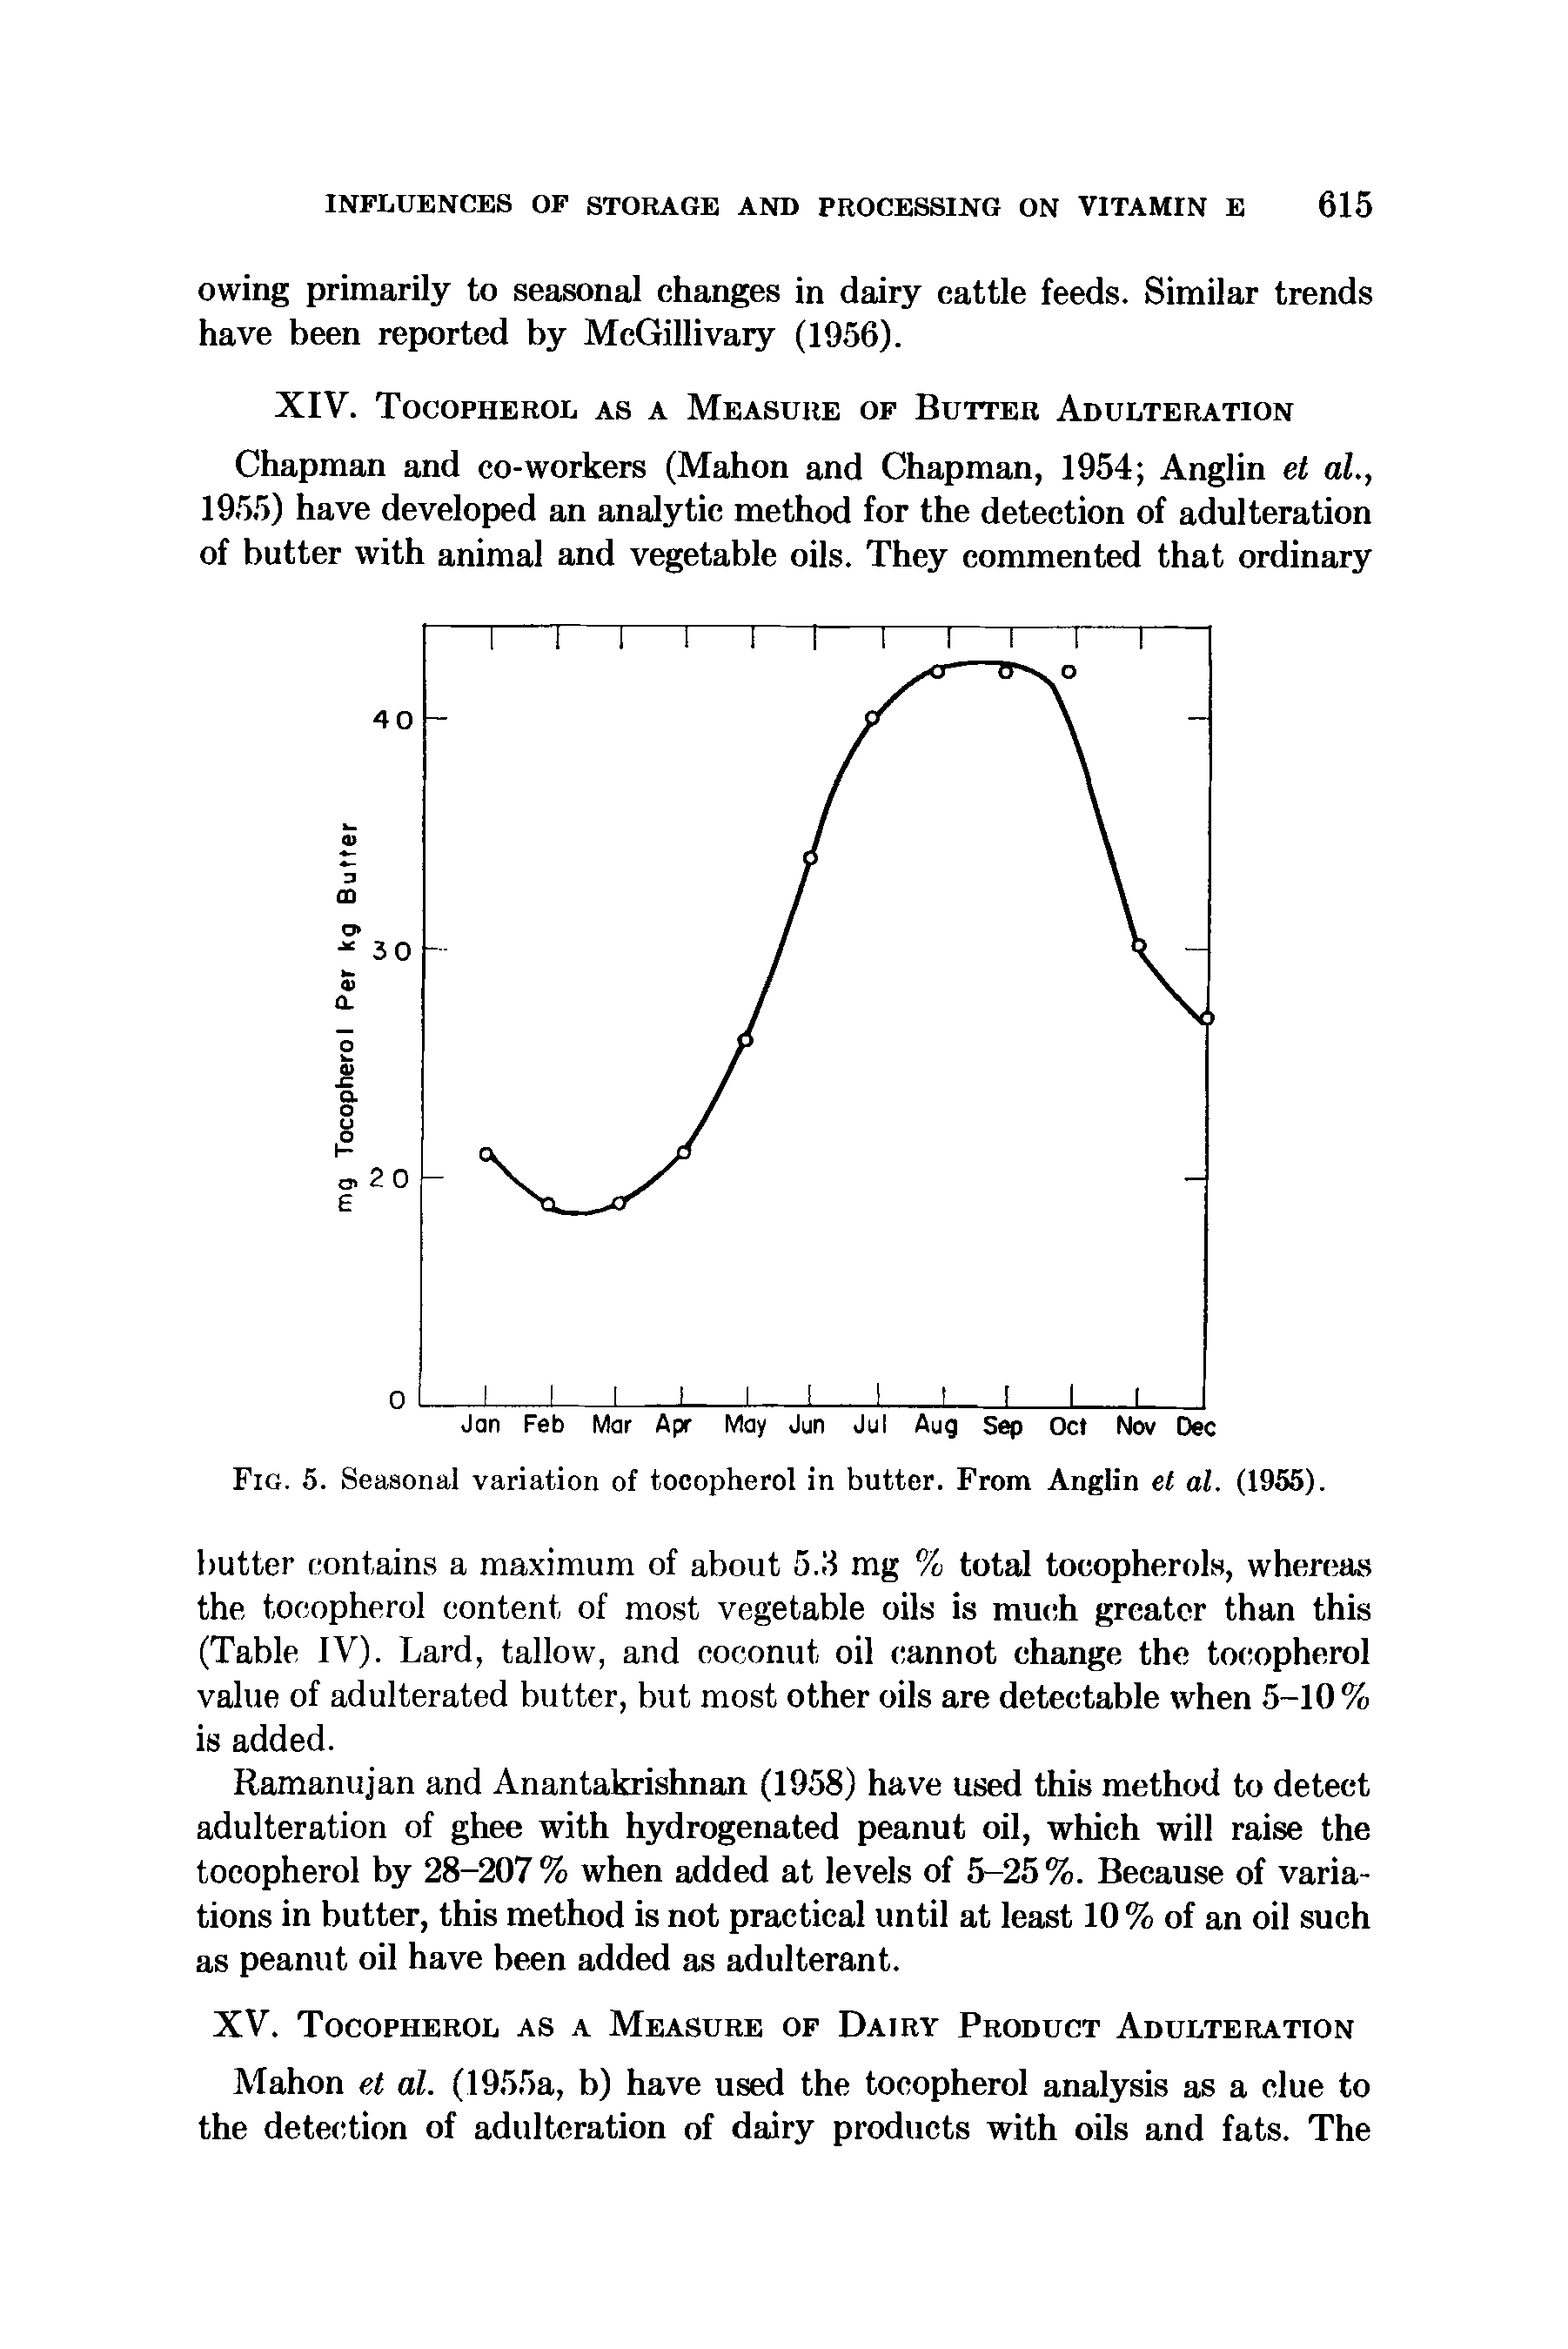 Fig. 5. Seasonal variation of tocopherol in butter. From Anglin el al. (1955).